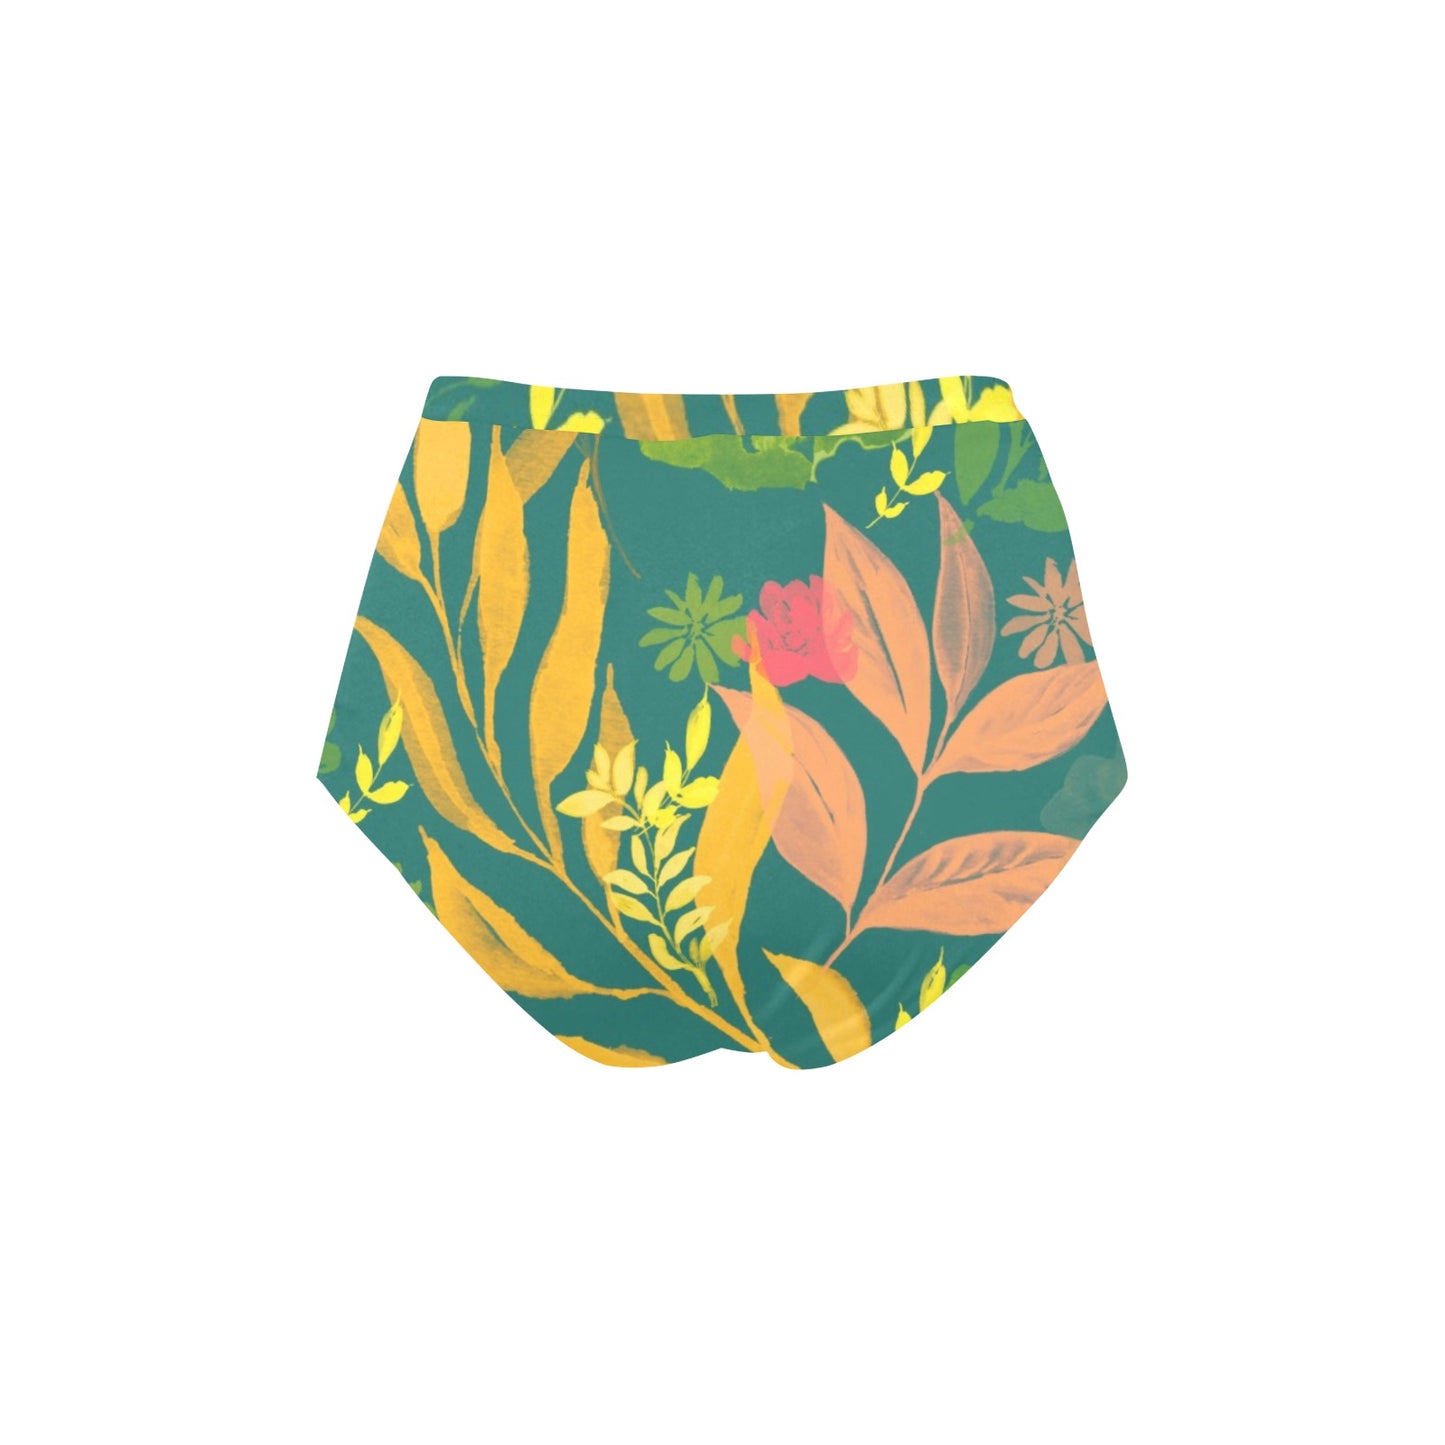 Multicolor Flowers High-Waisted Bikini Bottom. Design hand-painted by the Designer Maria Alejandra Echenique